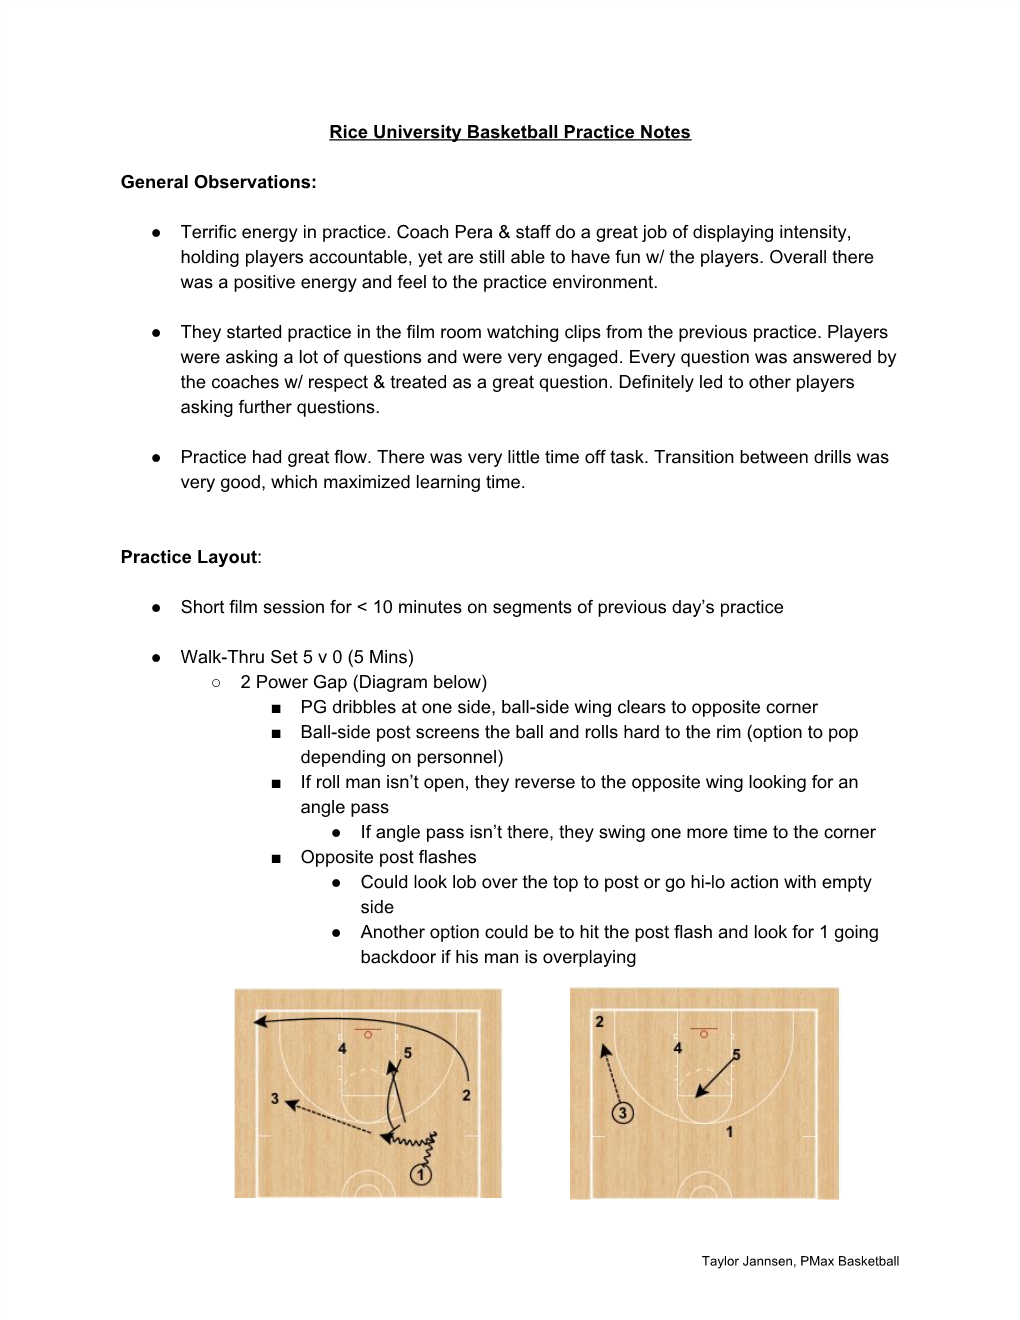 Rice University Men's Basketball Practice Notes